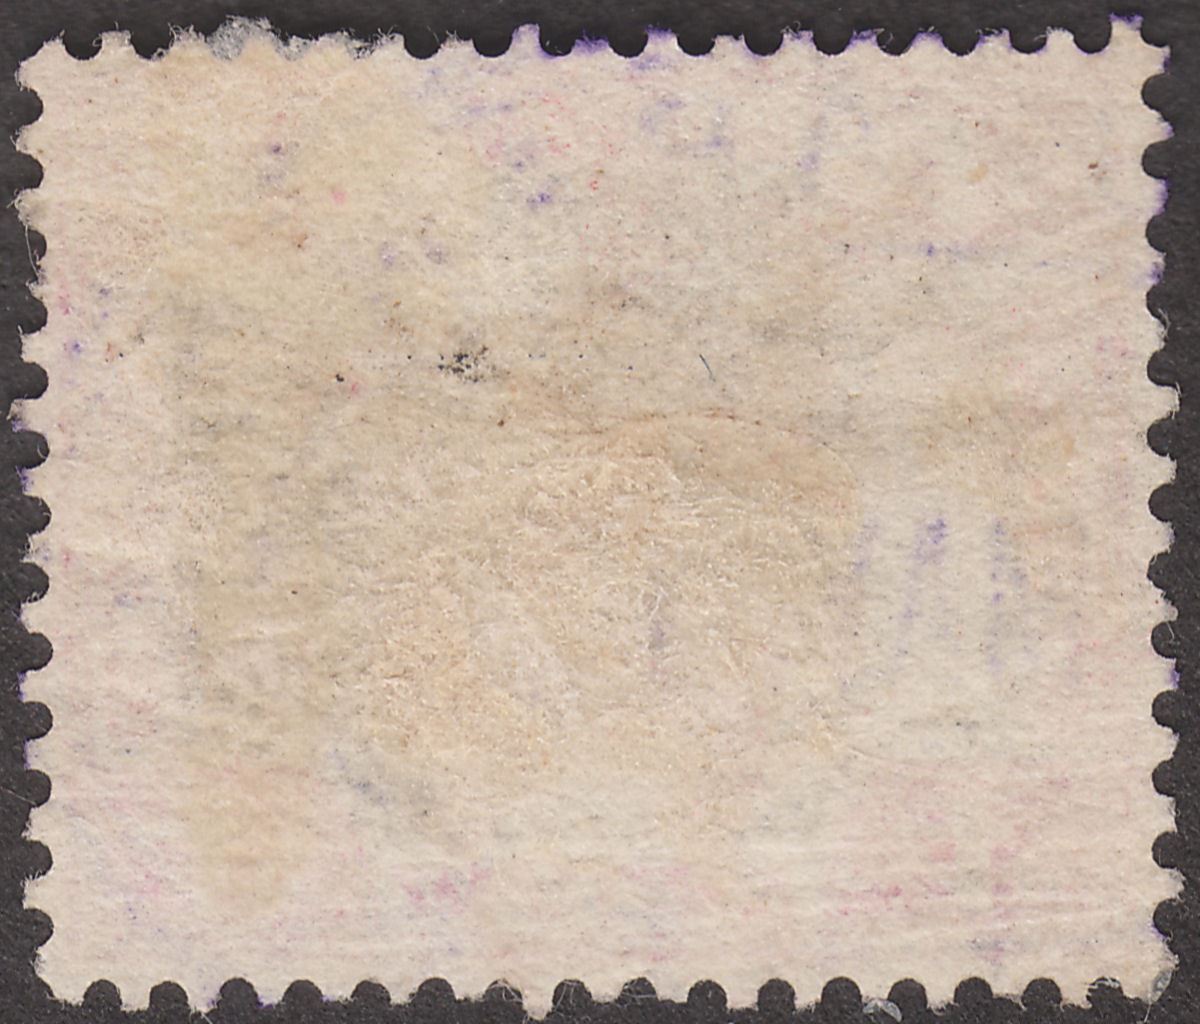 Federated Malay States 1918 KEVII Tiger 4c Used with BATU ARANG Postmark